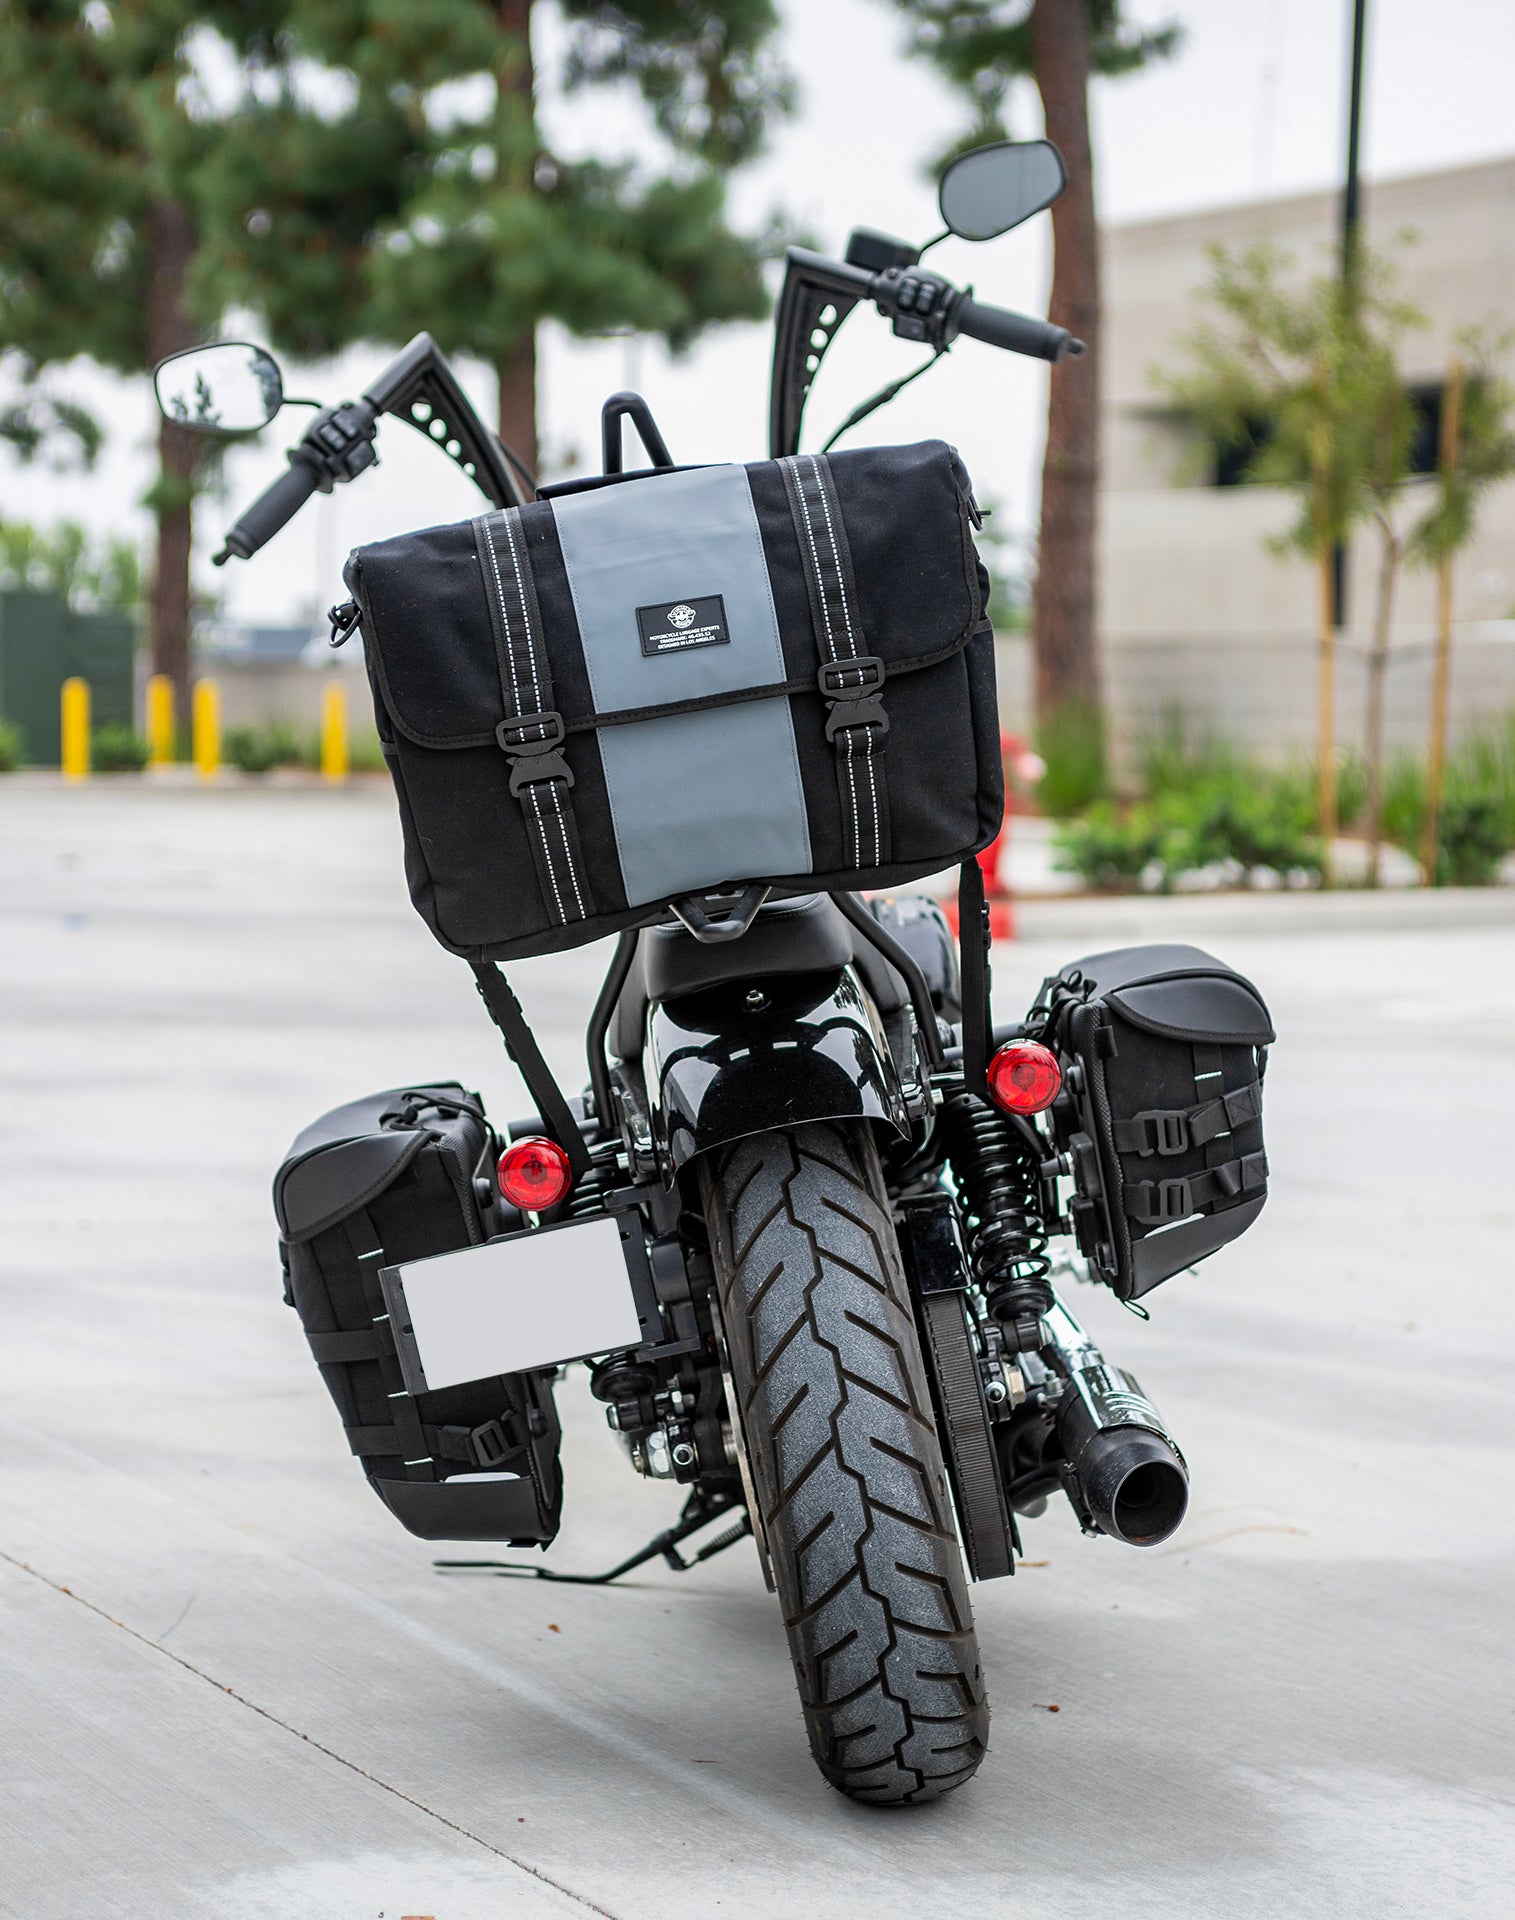 23L - Duo-tone Medium Indian Motorcycle Messenger Bag Gray/Black